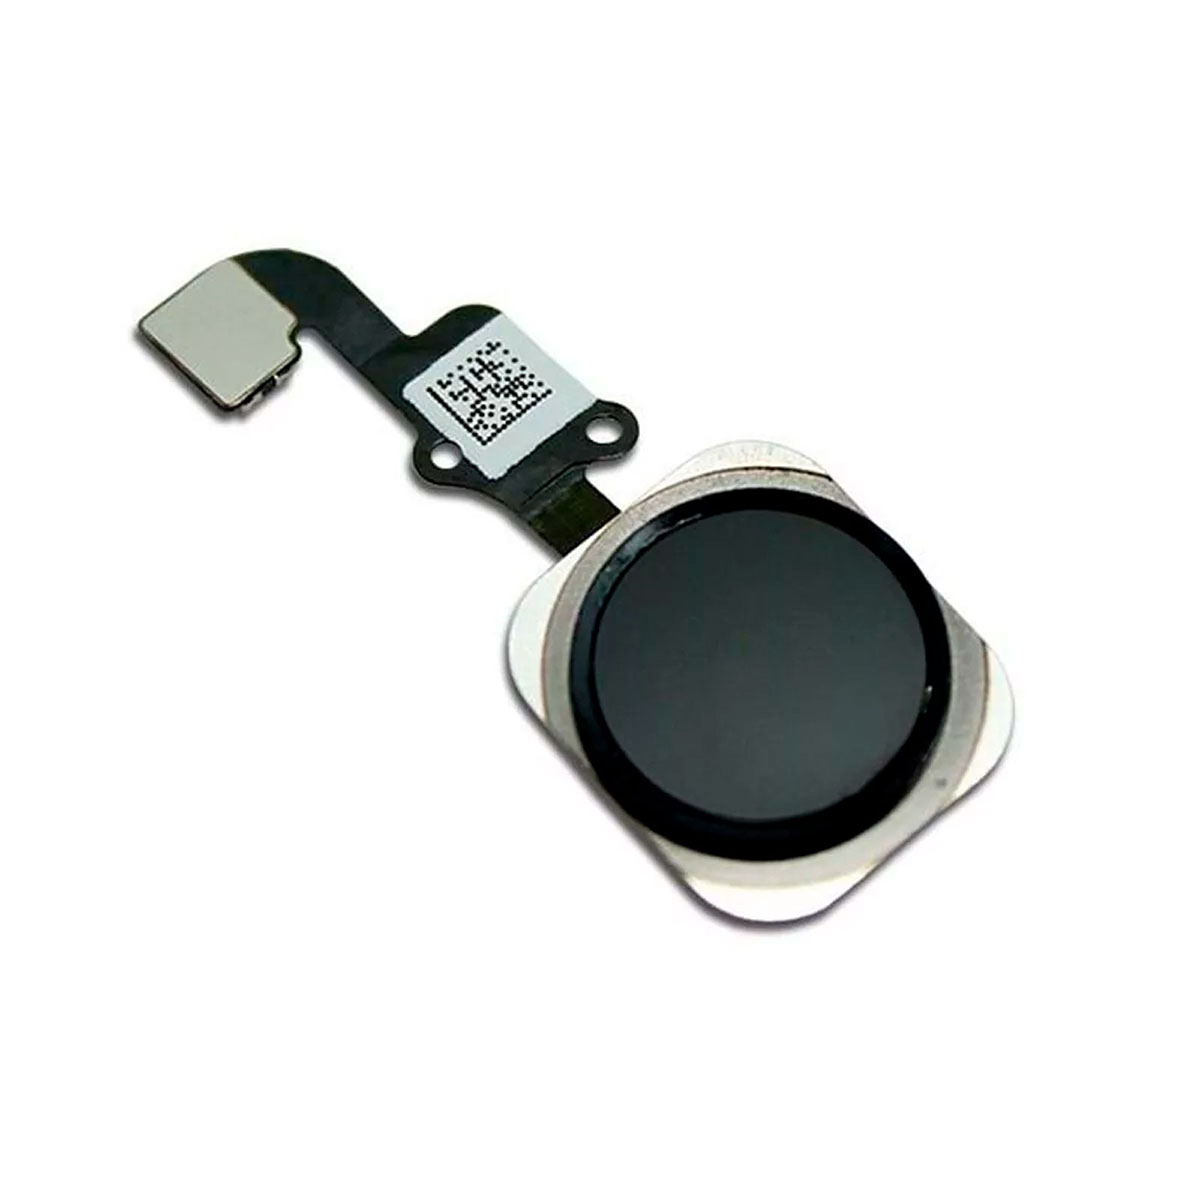 Кнопка HOME для APPLE iPhone 6G, iPhone 6 Plus, цвет черный